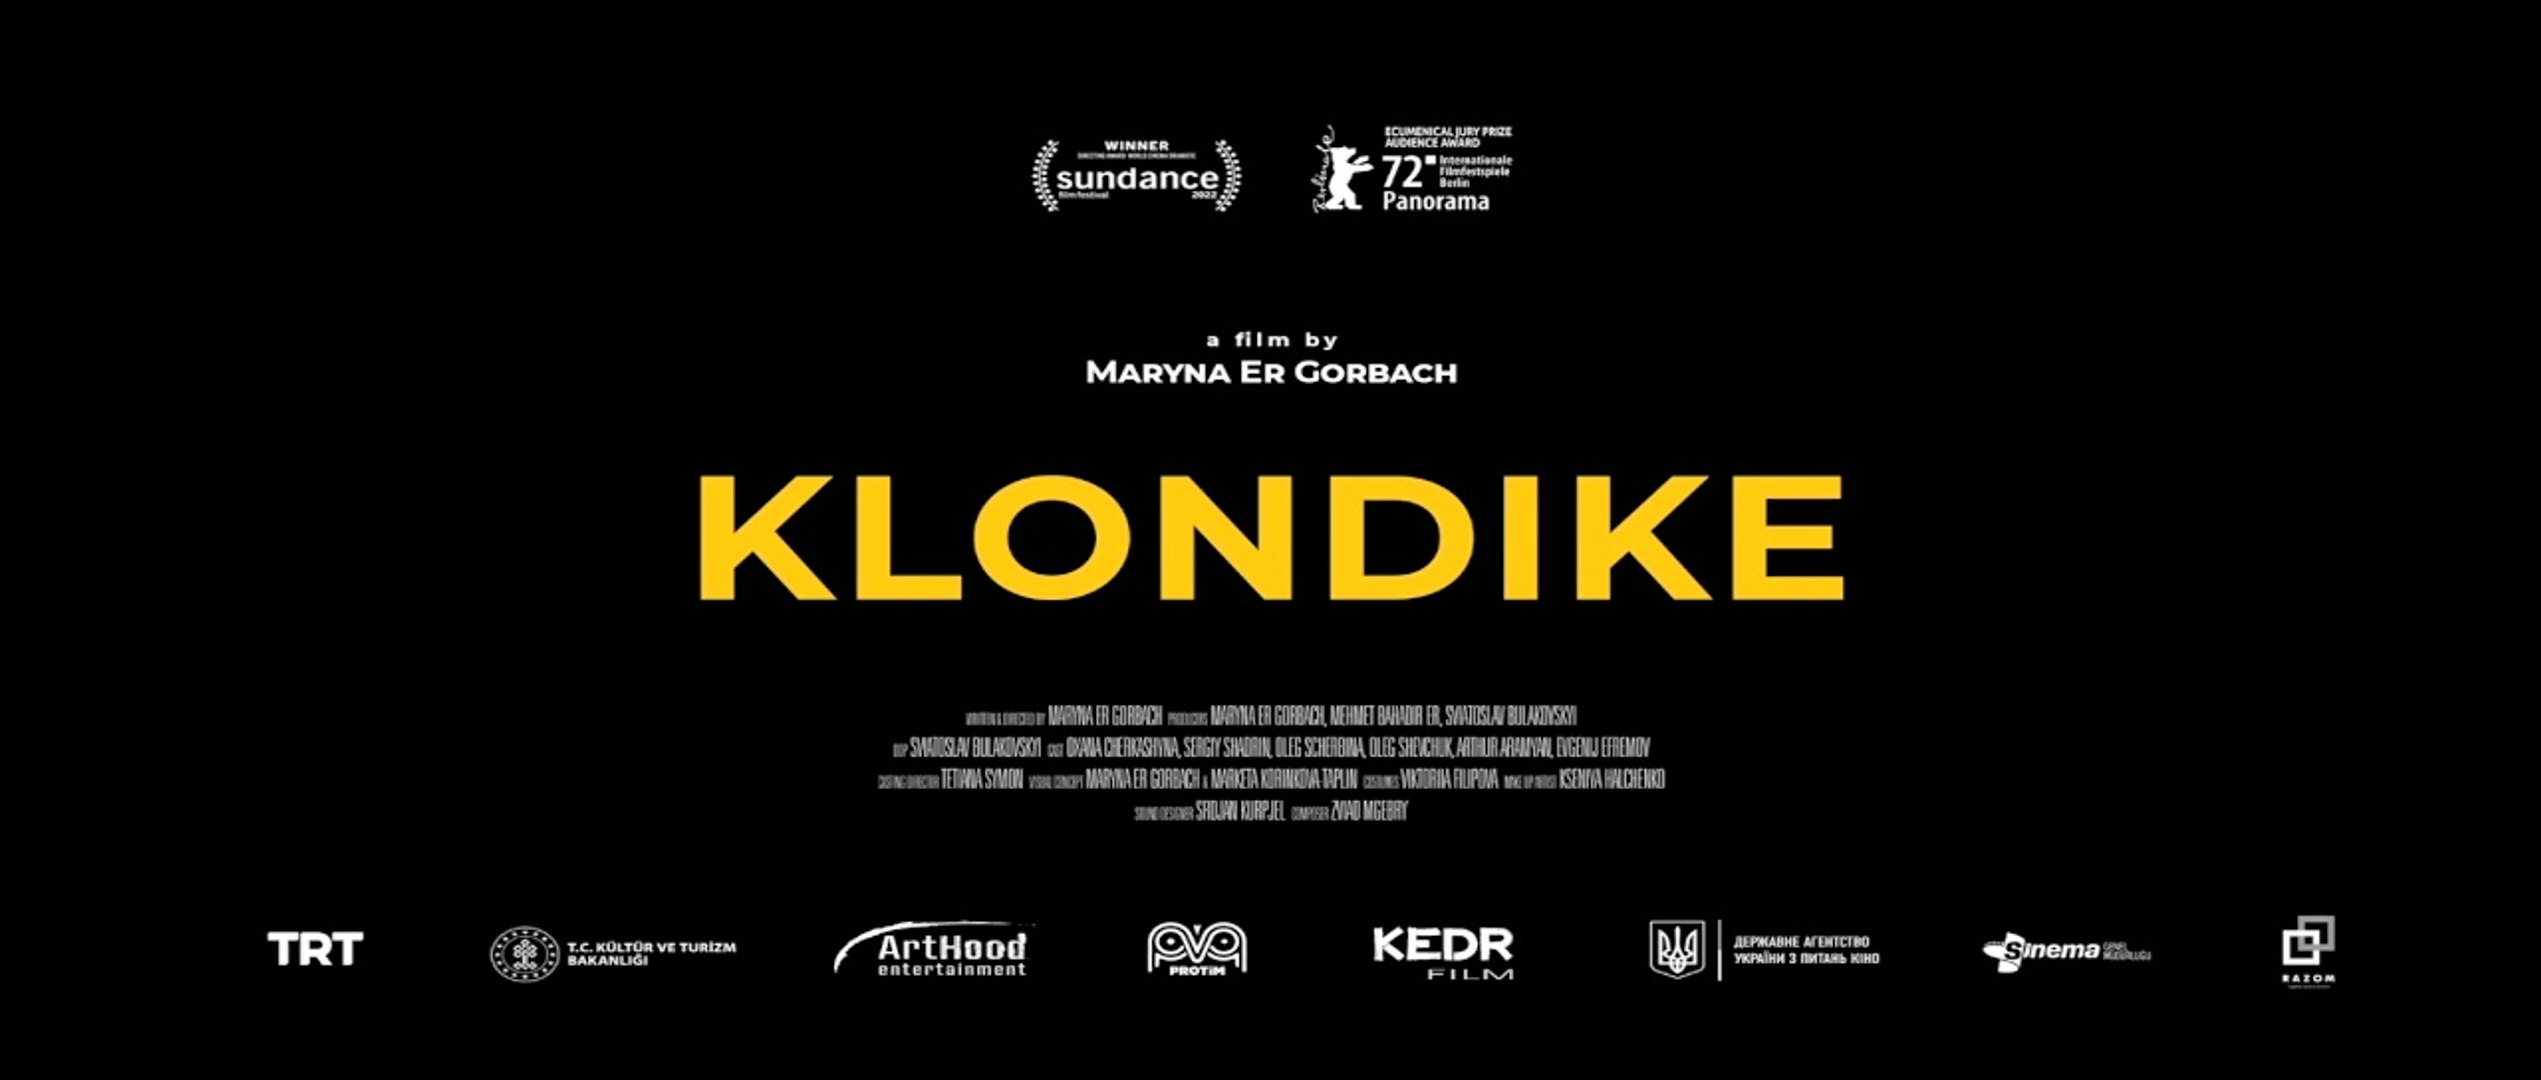 klondike-trailer-netflix - video Dailymotion